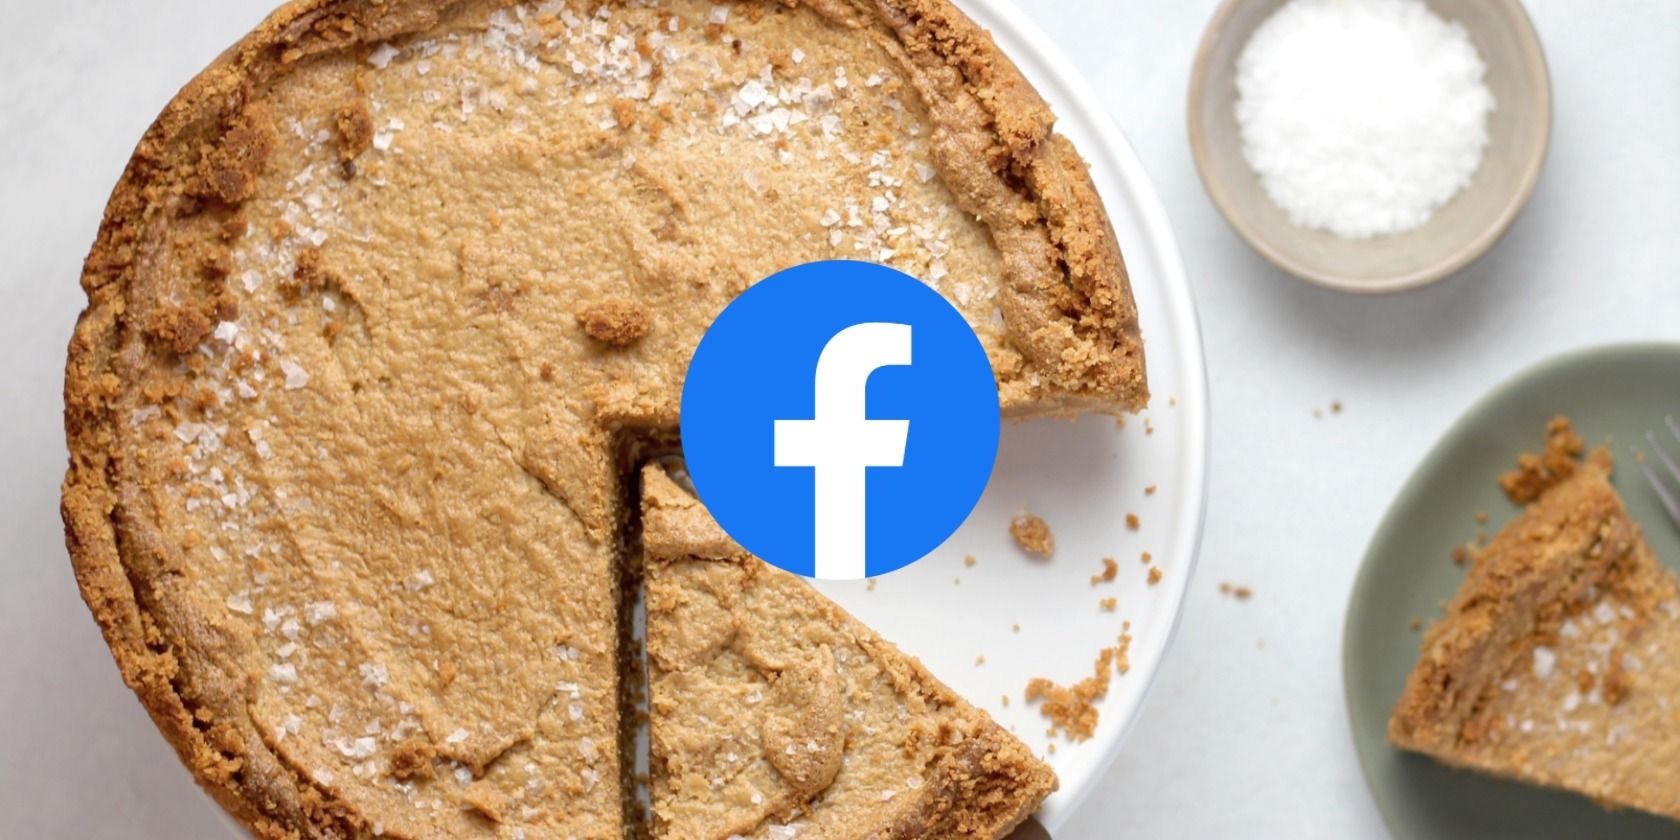 An image of the Facebook logo over a pie